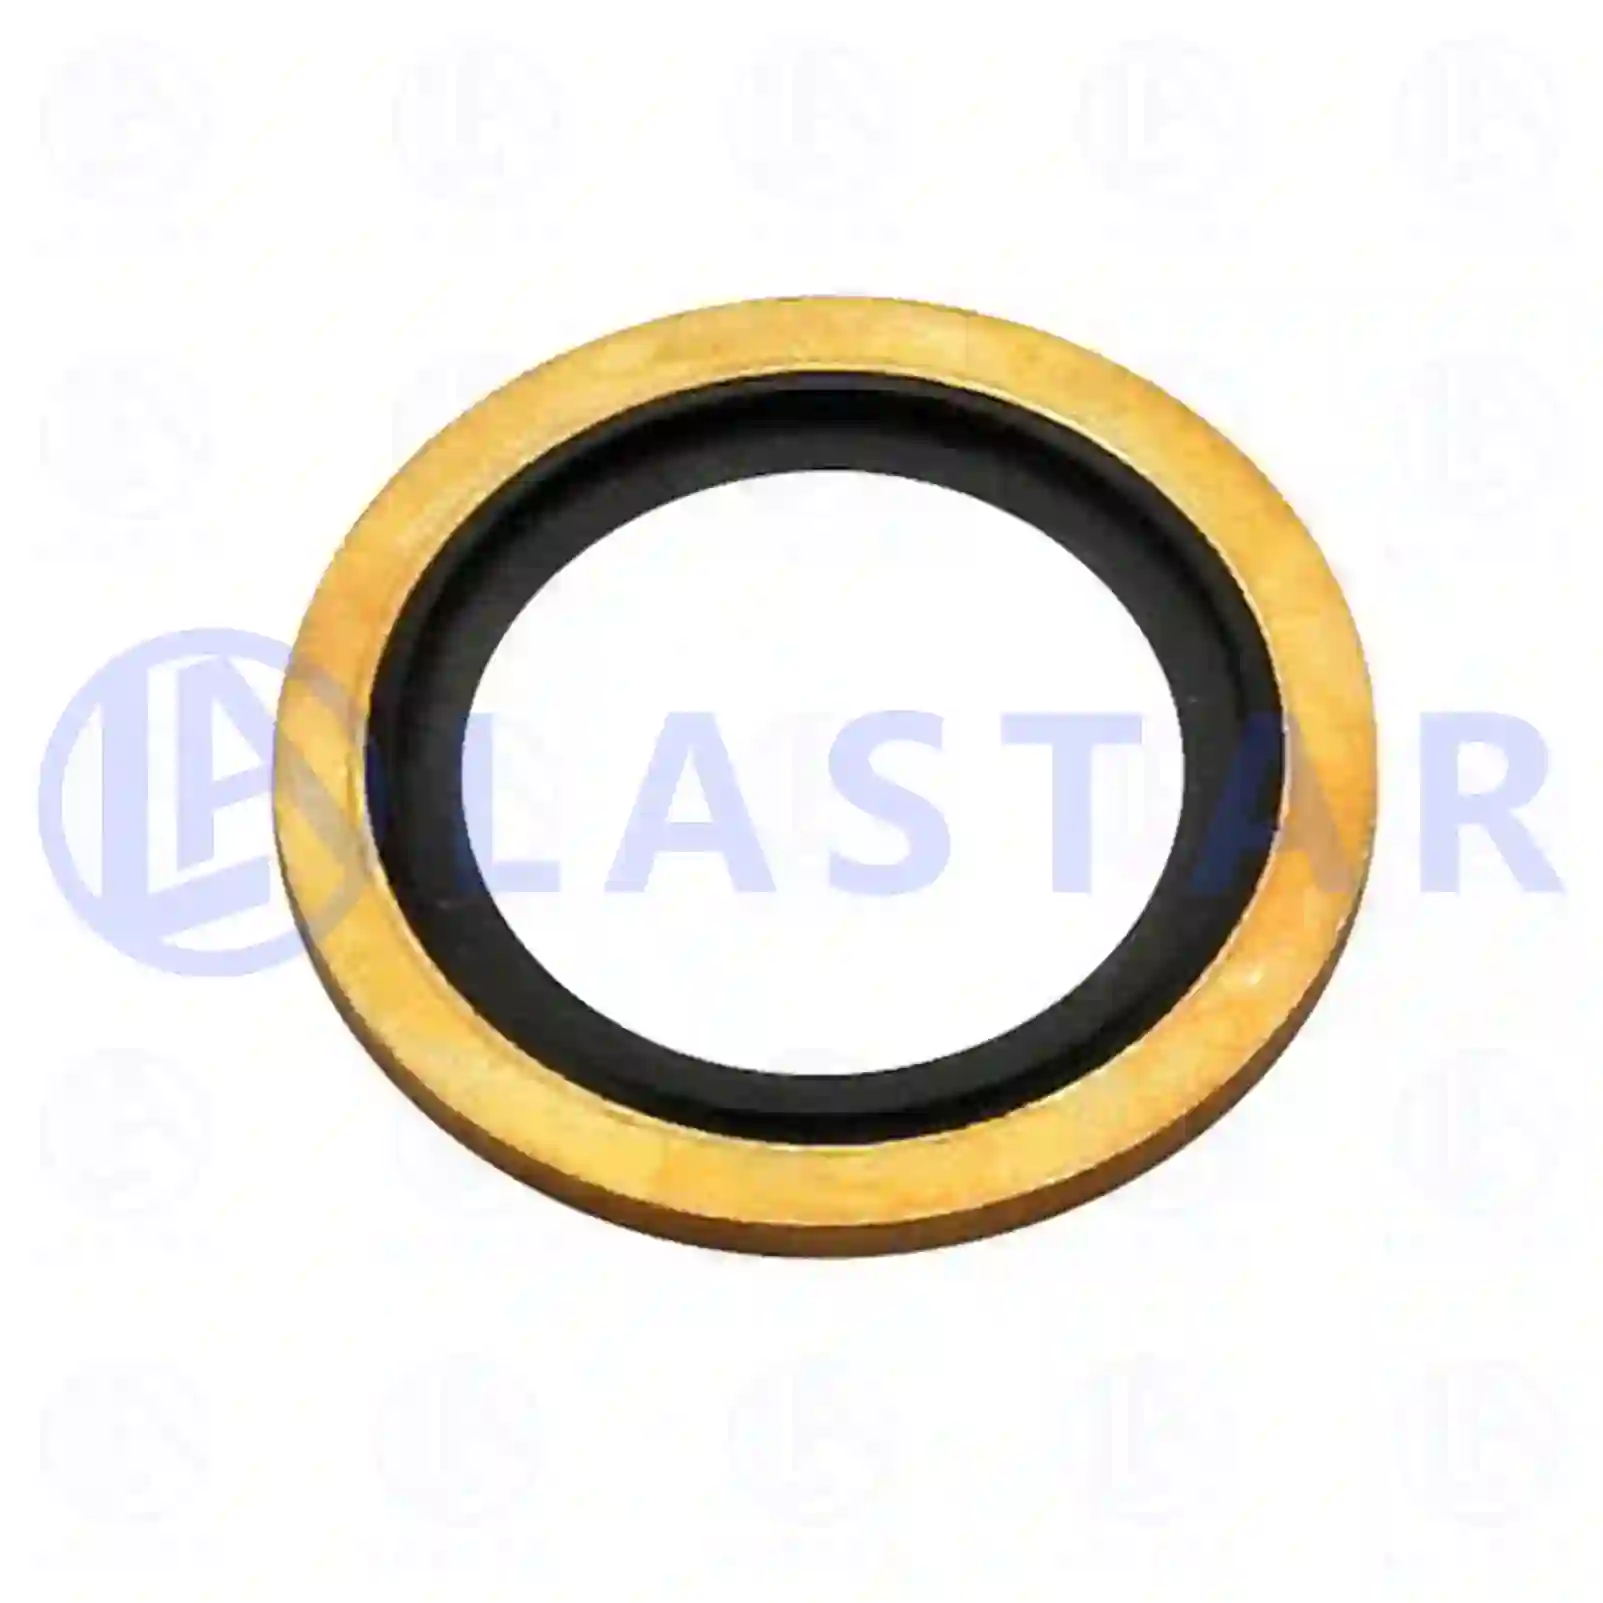 Gearbox Housing Seal ring, la no: 77732140 ,  oem no:982508, ZG30585-0008, Lastar Spare Part | Truck Spare Parts, Auotomotive Spare Parts